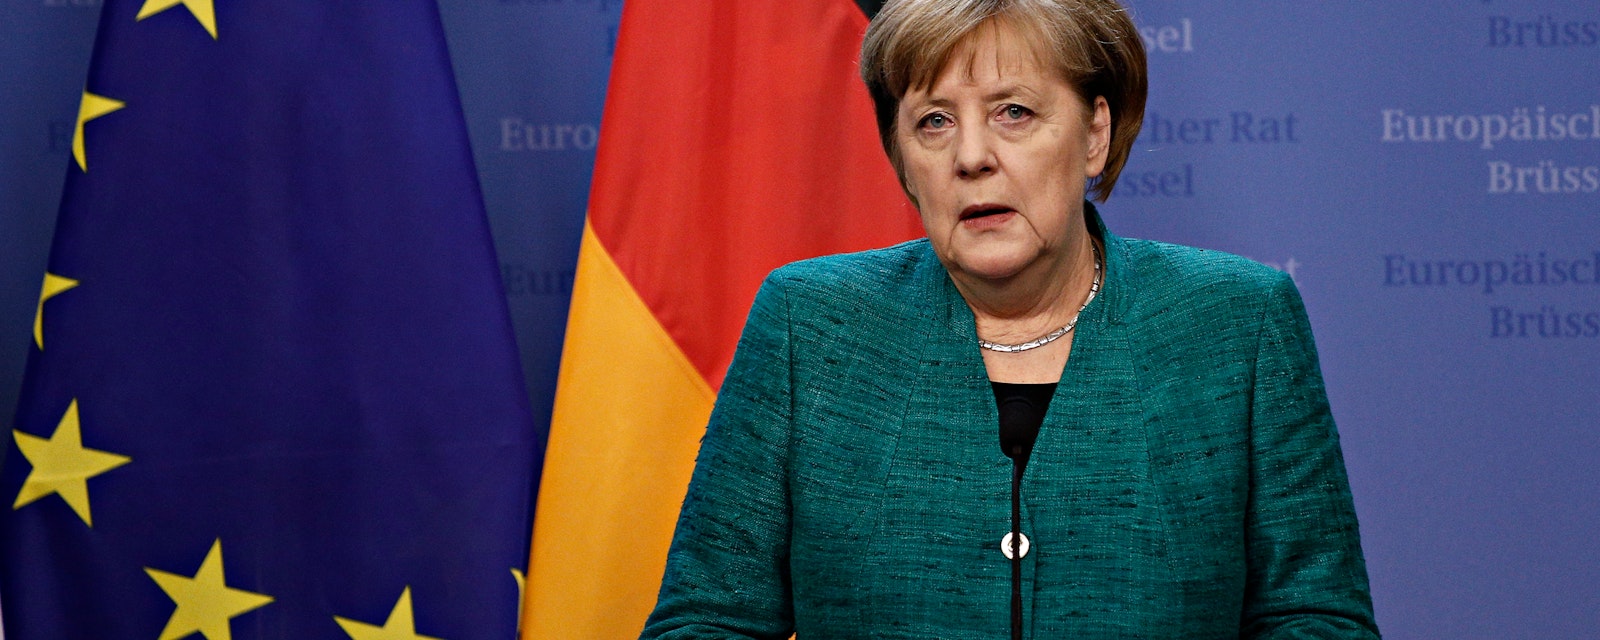 Portrait of Angela Merkel